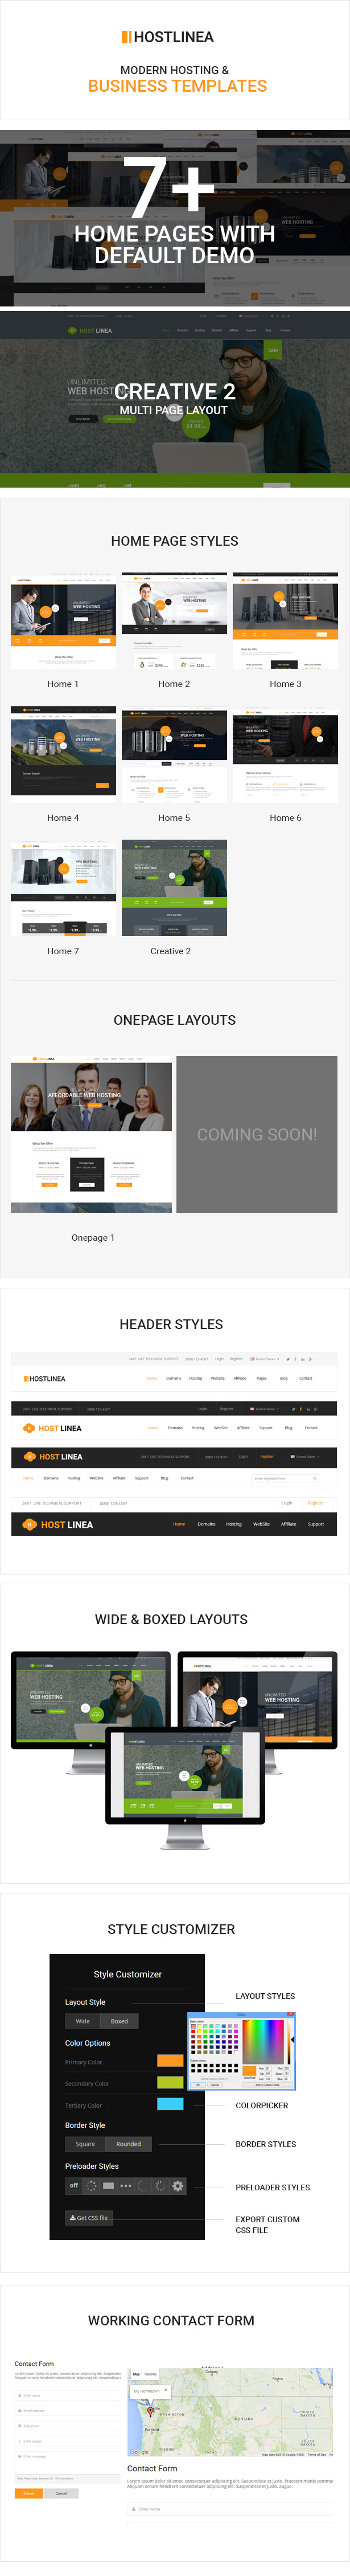 item showcase - Hostlinea - Web Hosting, Responsive HTML5 Template